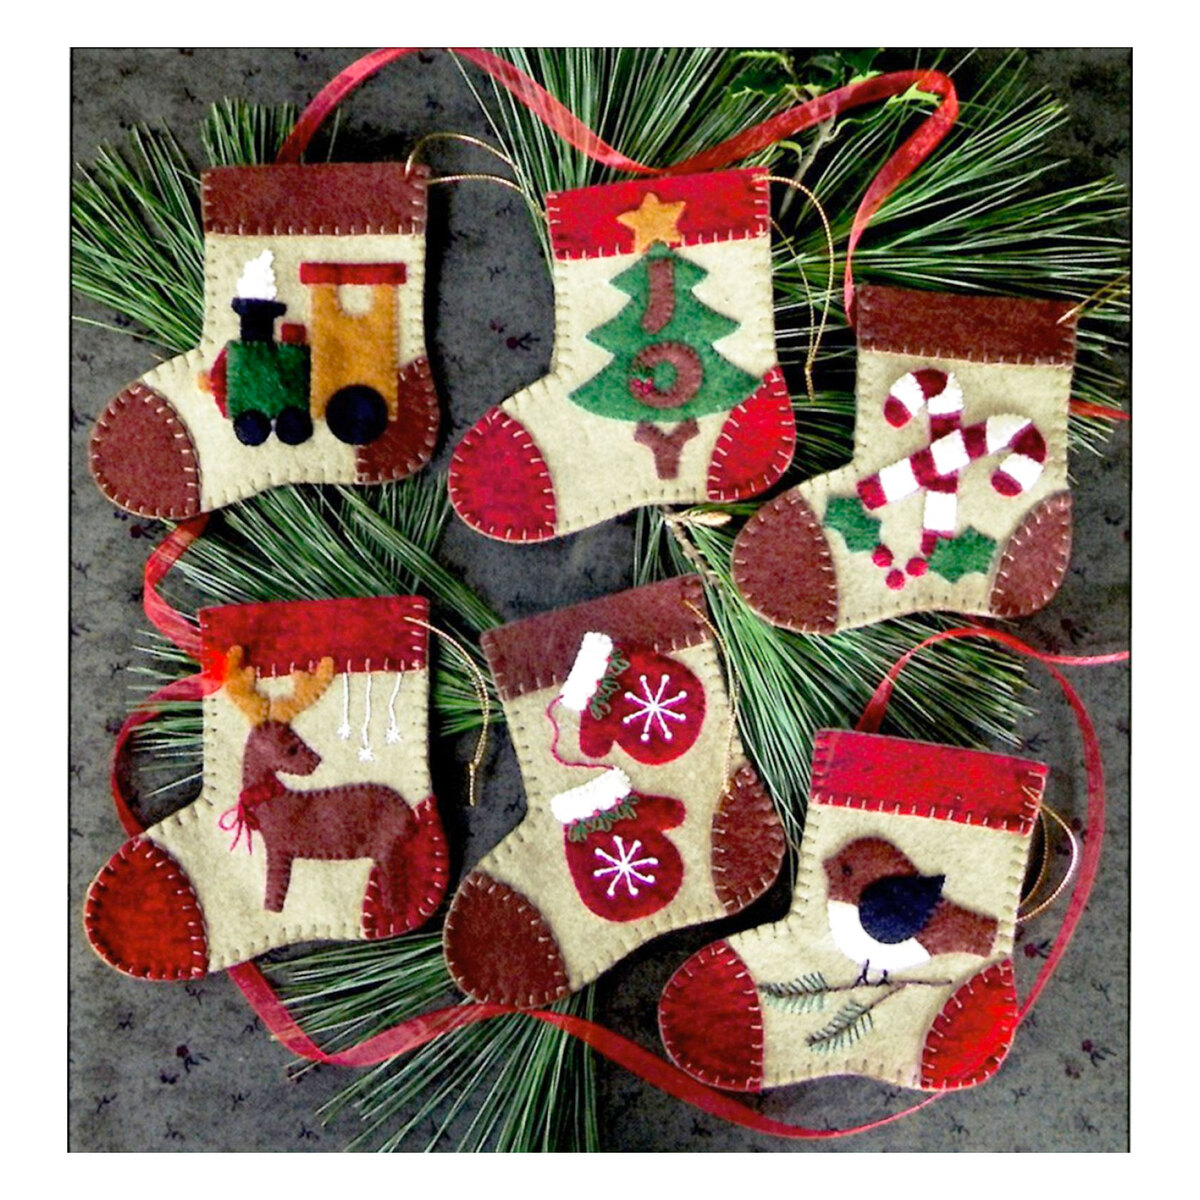 Everything Nice Stuffed Christmas Ornament Kit - In Wool Felt